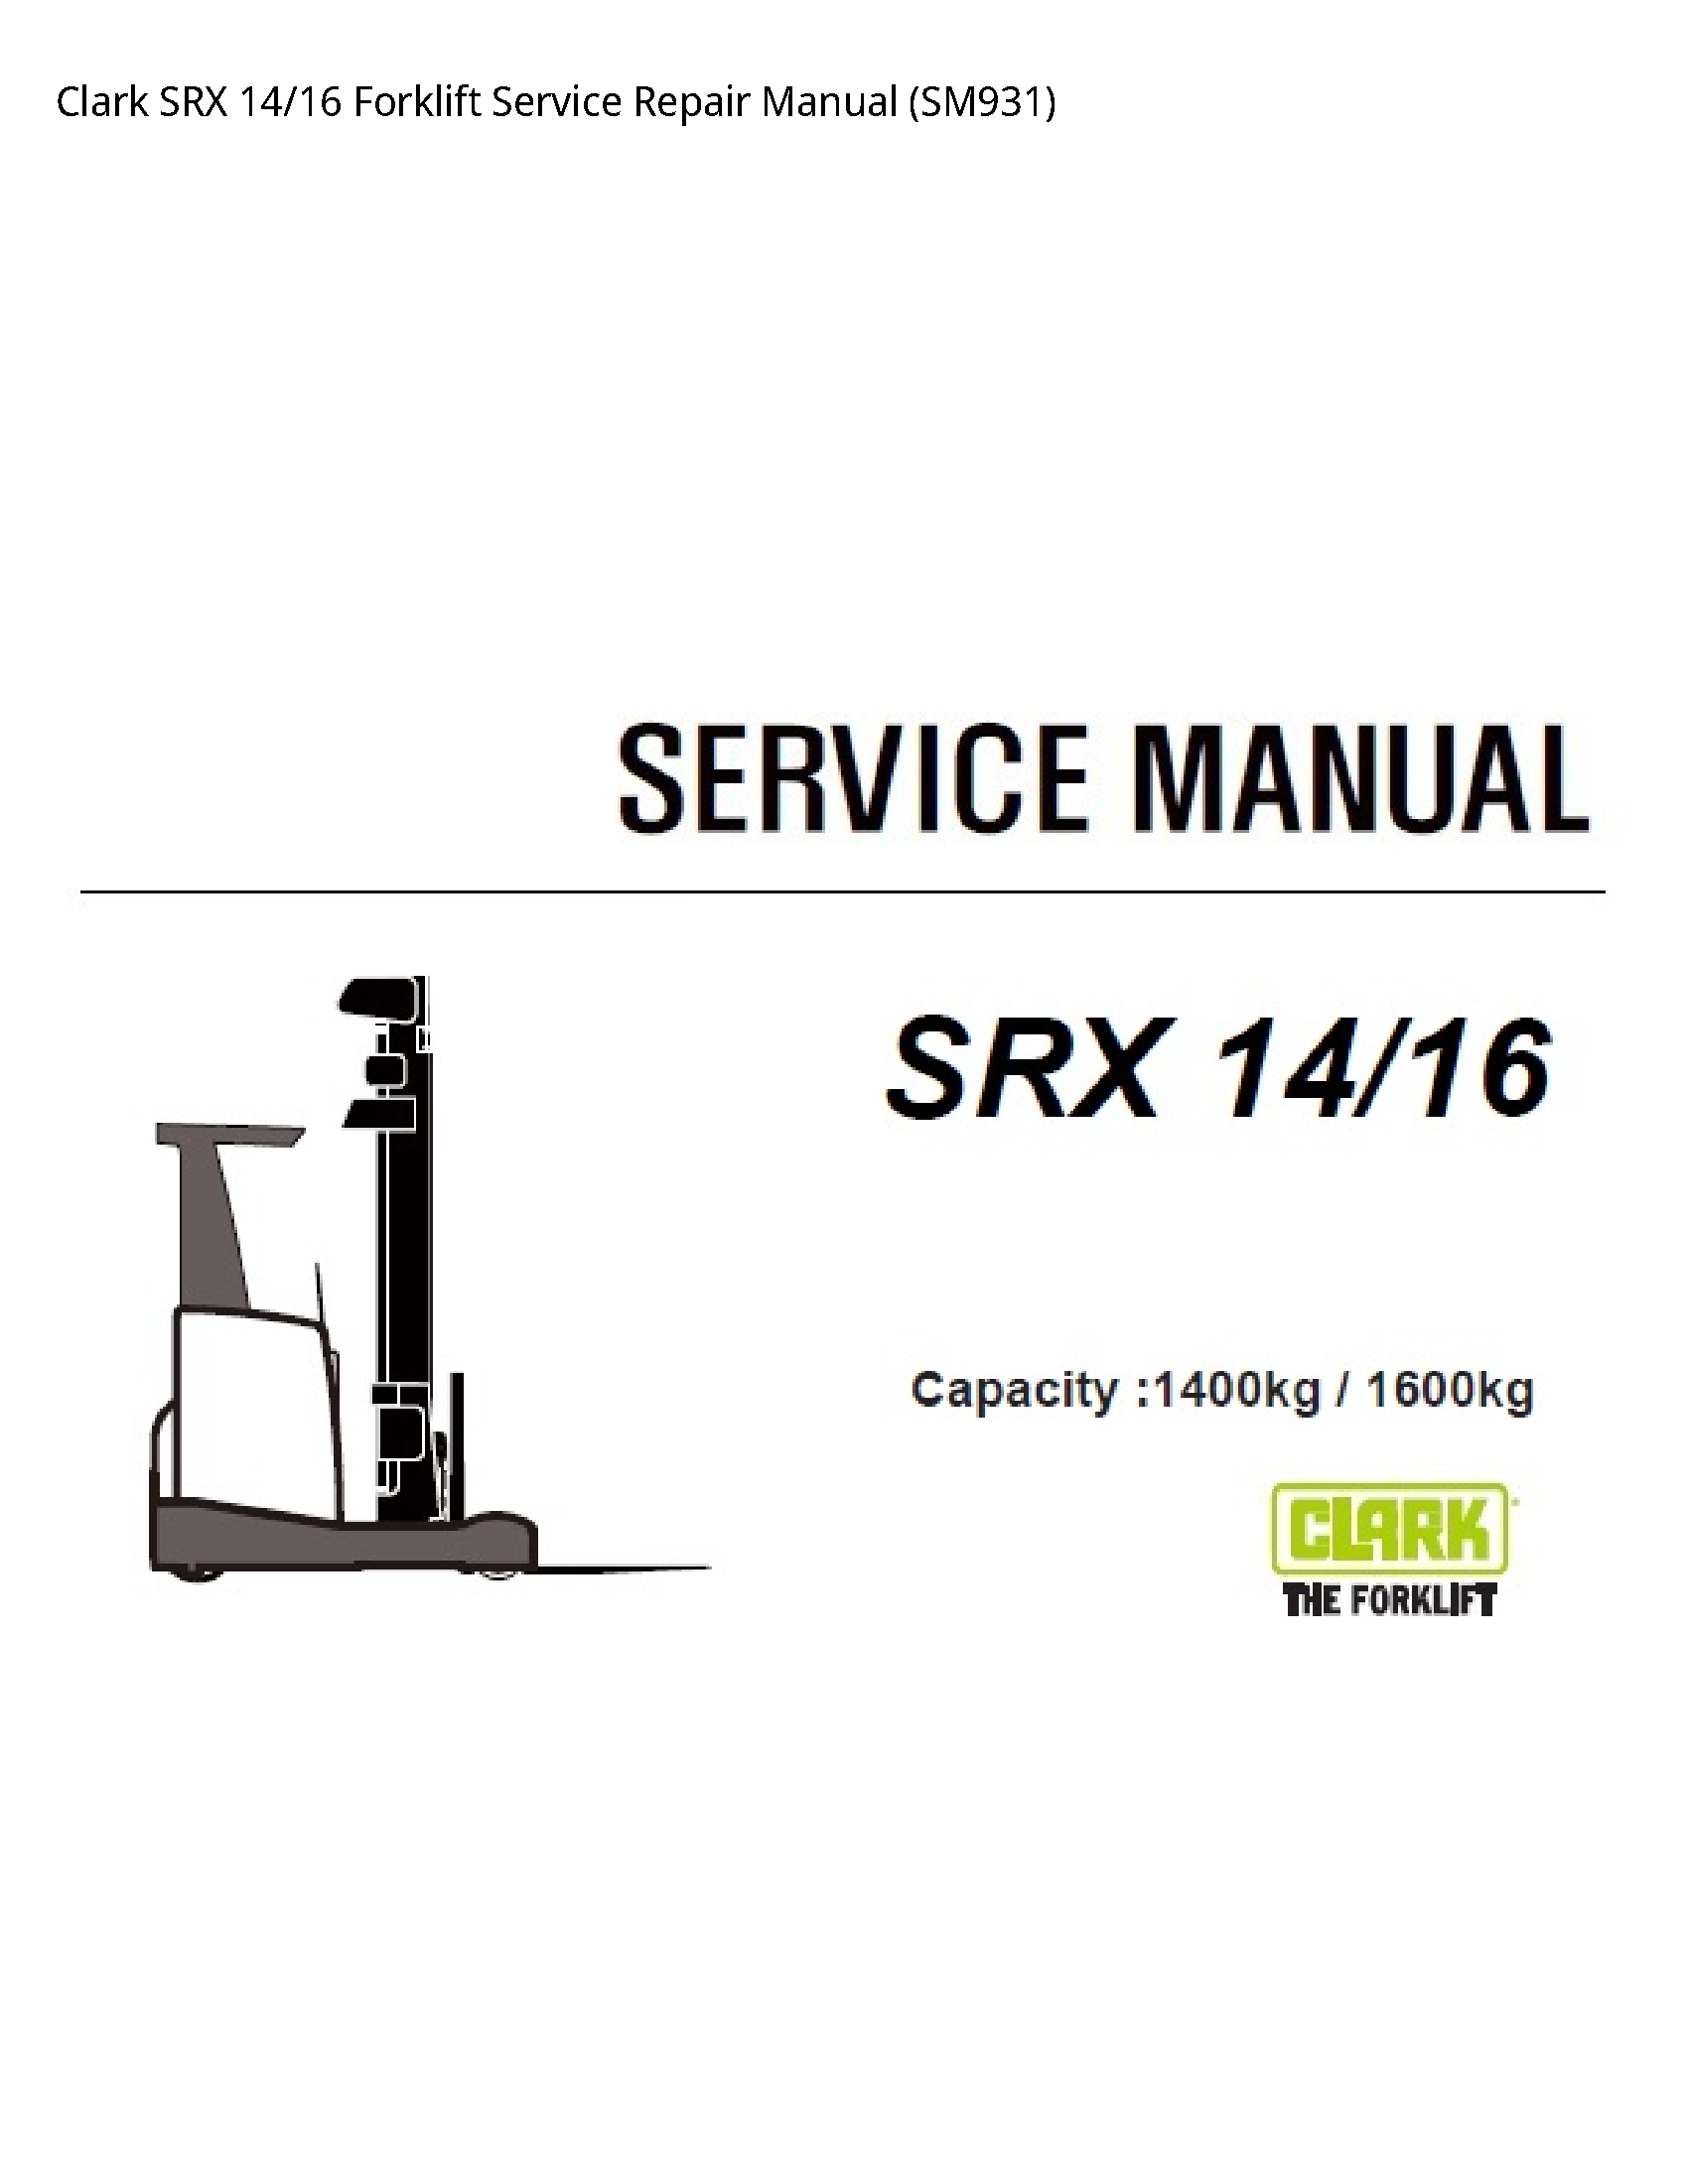 Clark 14 SRX Forklift manual